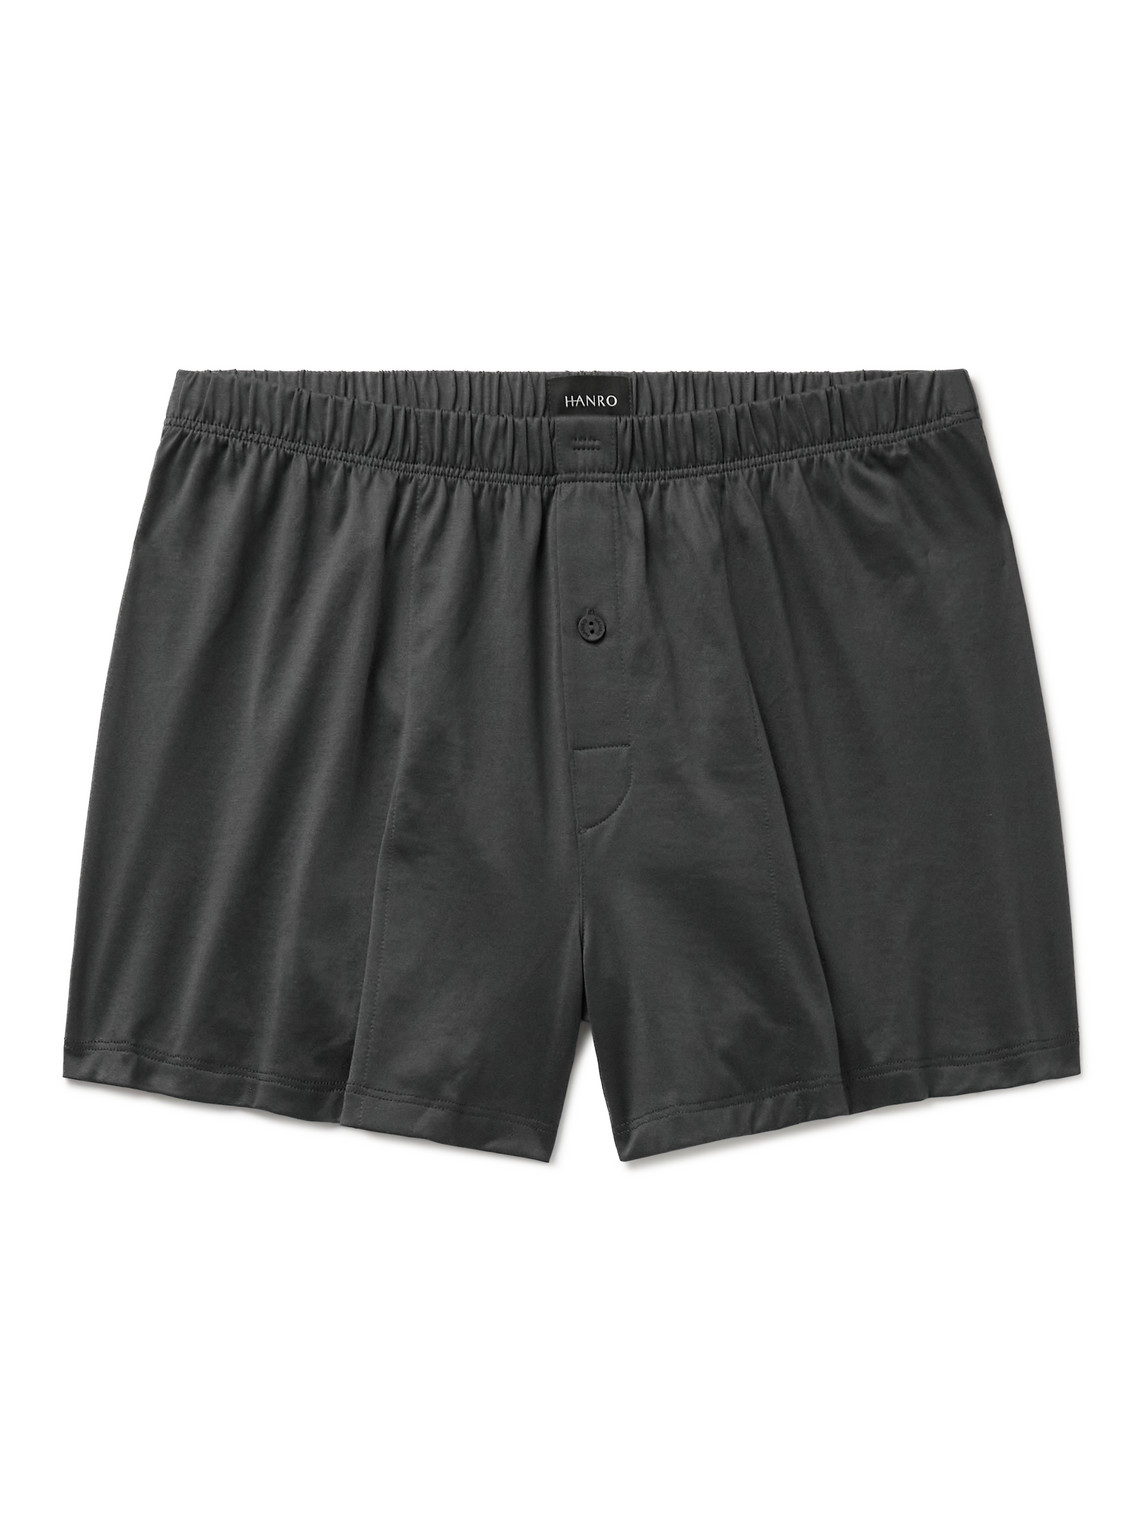 Hanro Sporty Mercerised Cotton Boxer Shorts In Grey